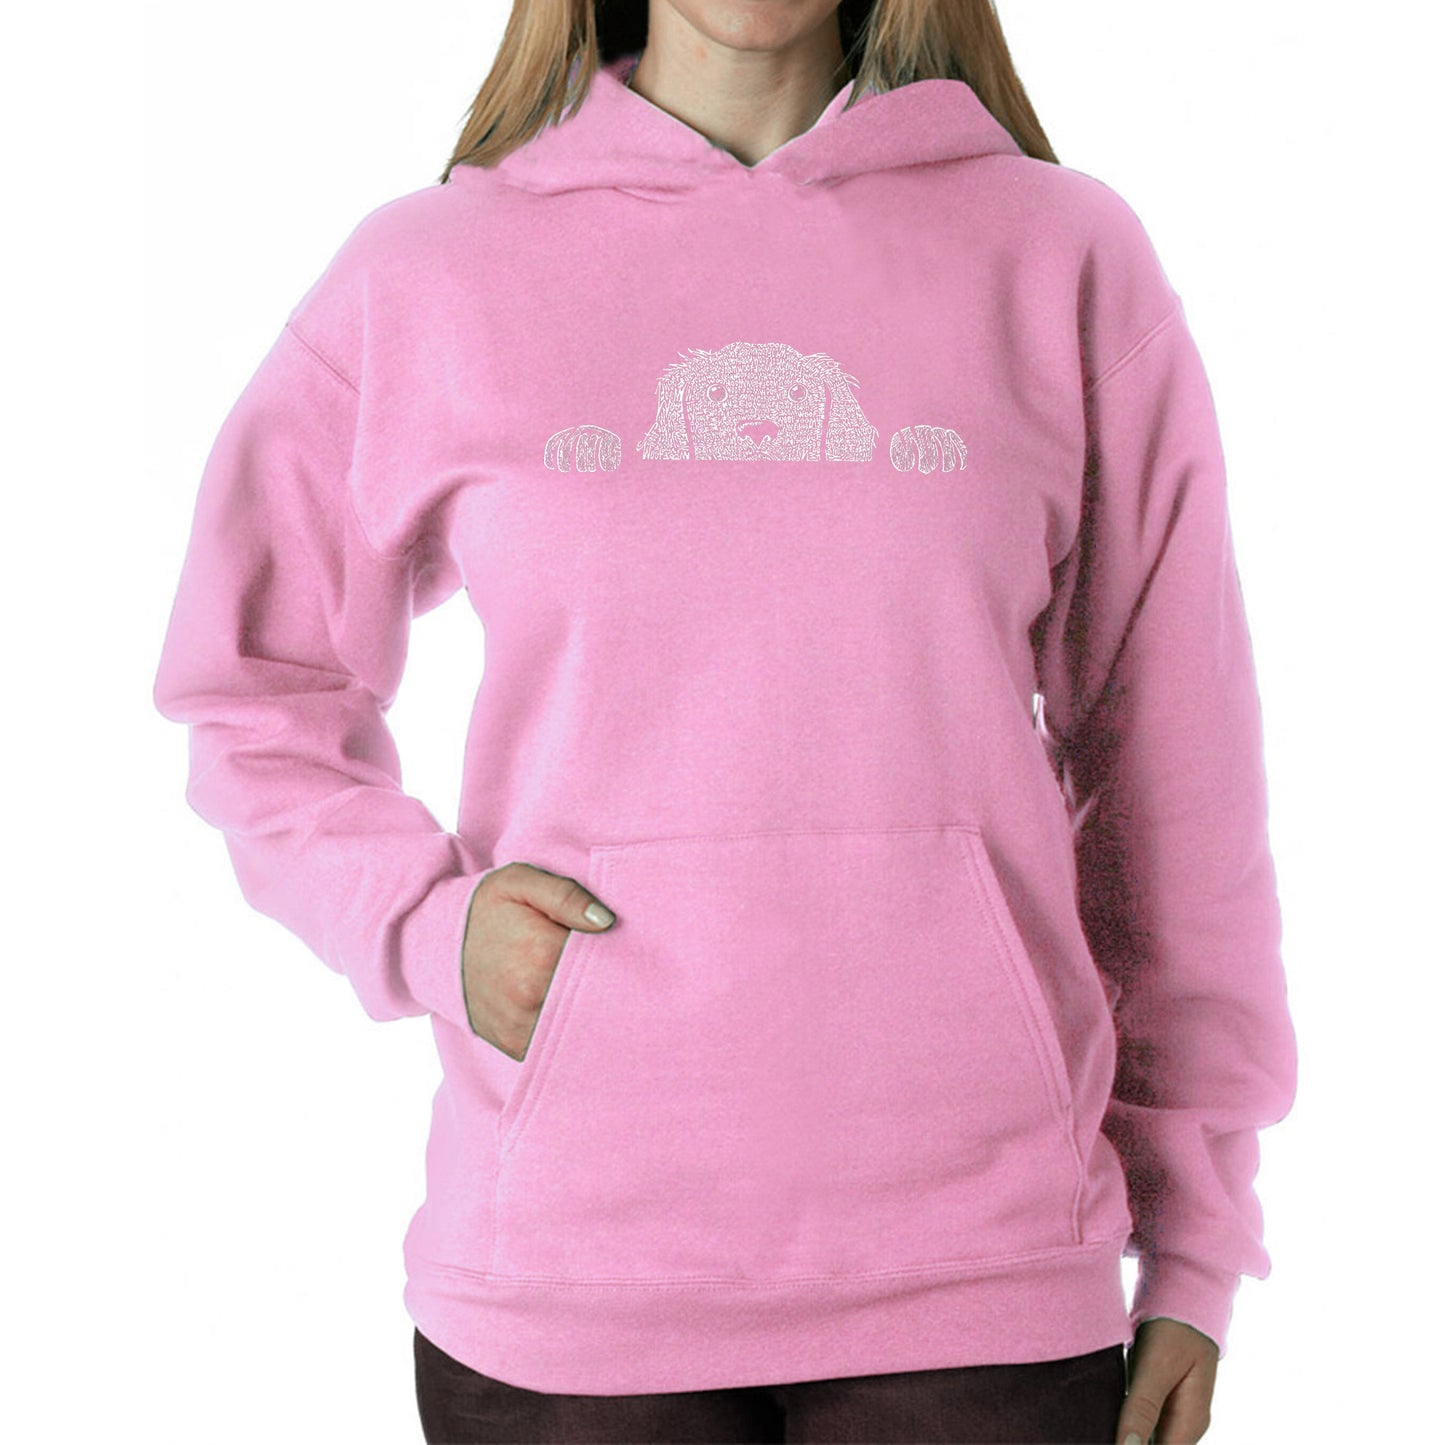 Peeking Dog  - Women's Word Art Hooded Sweatshirt